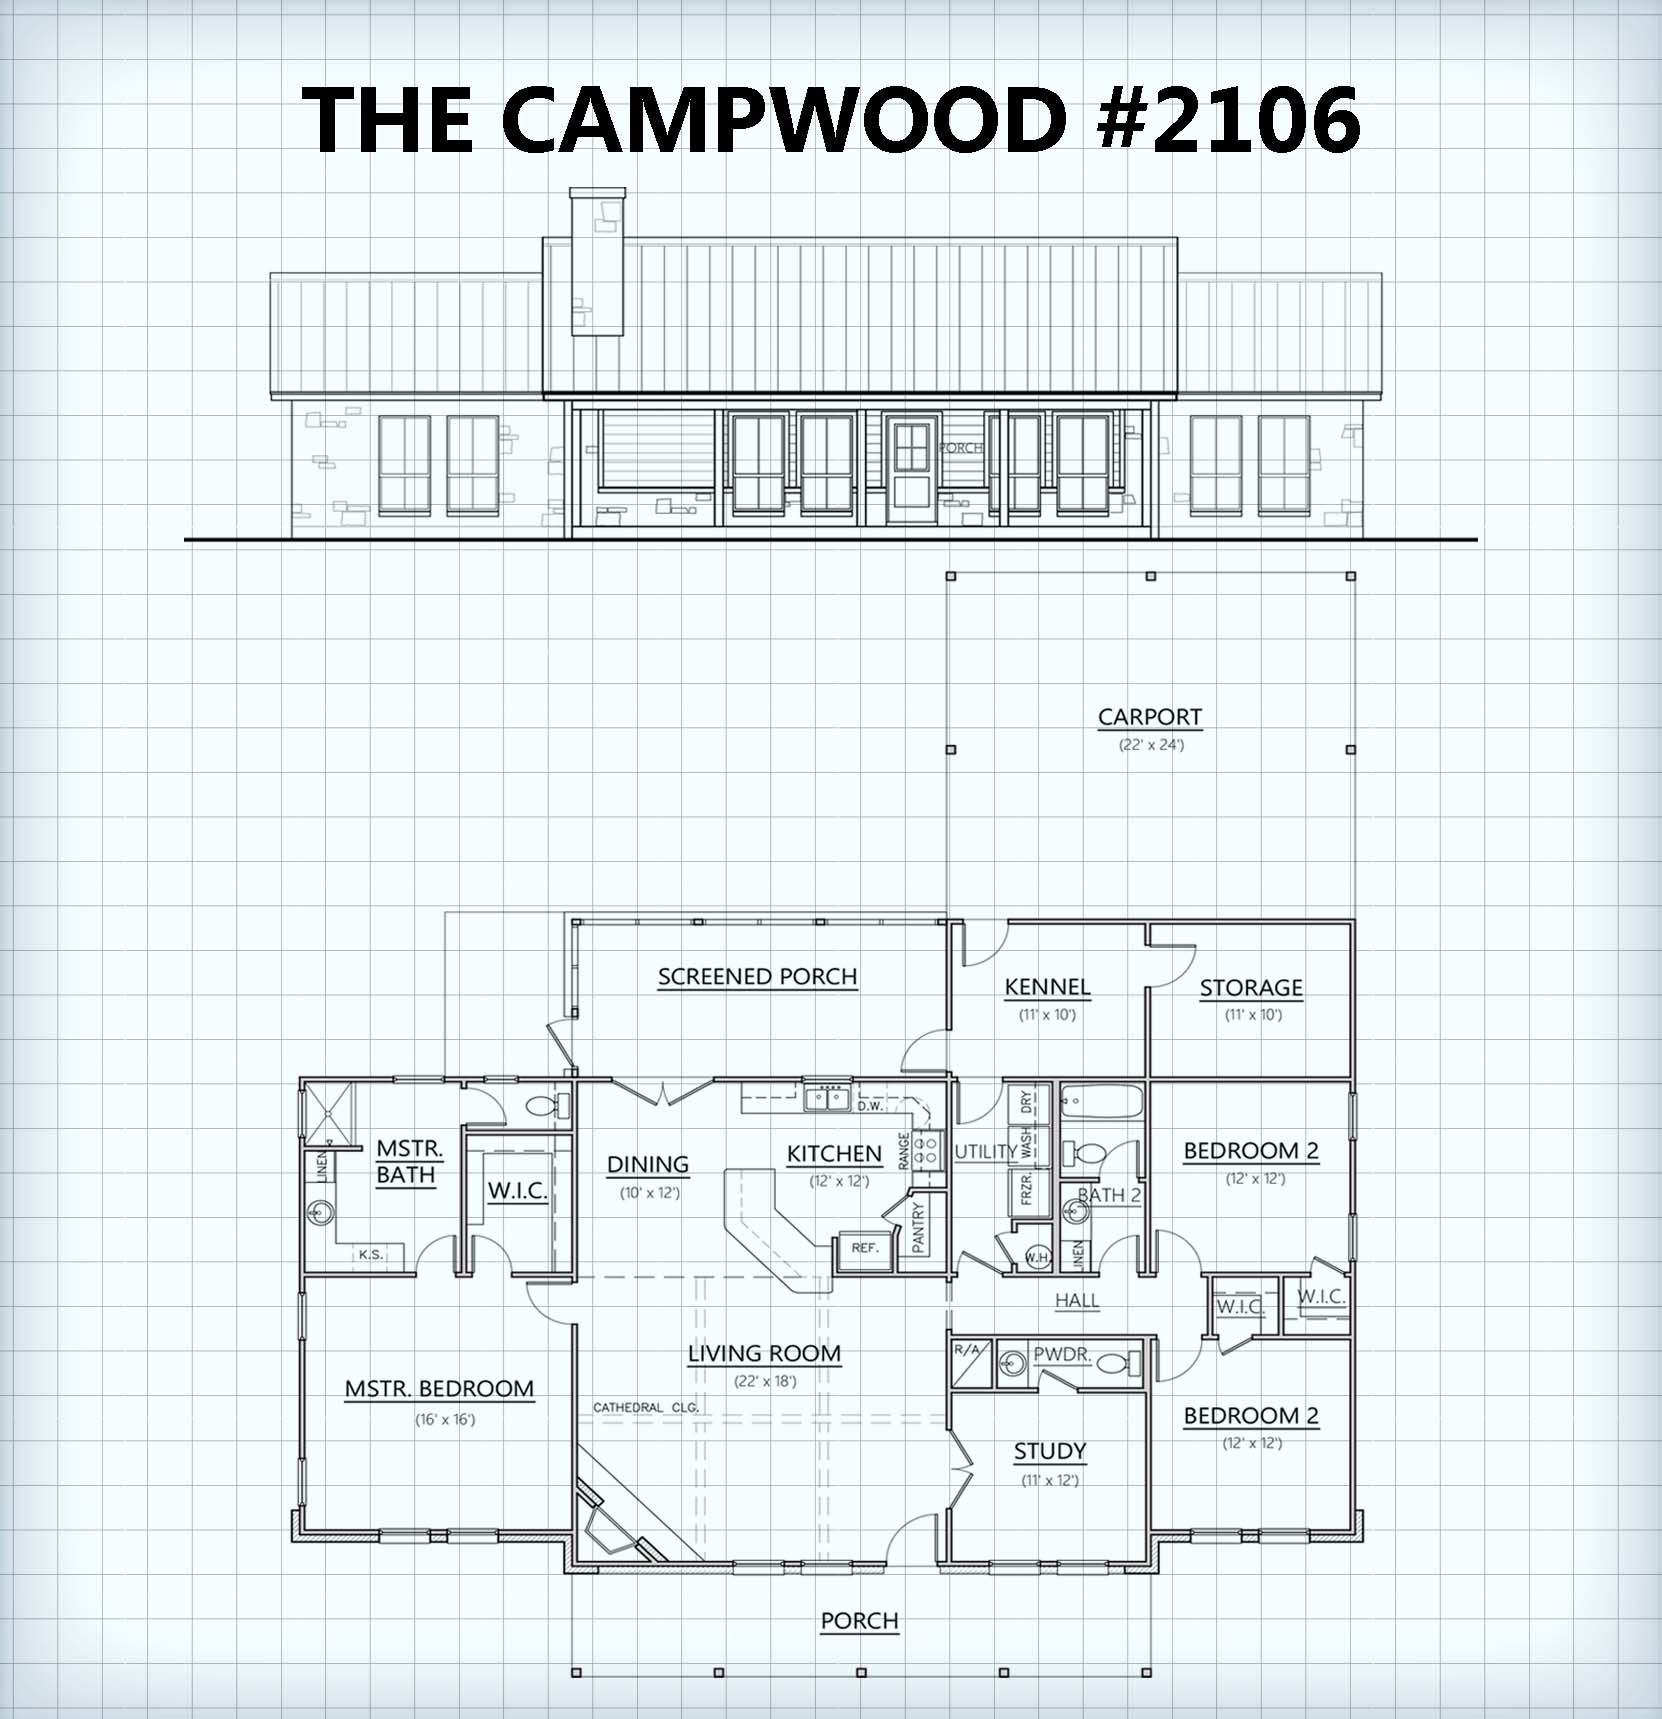 Campwood 2106